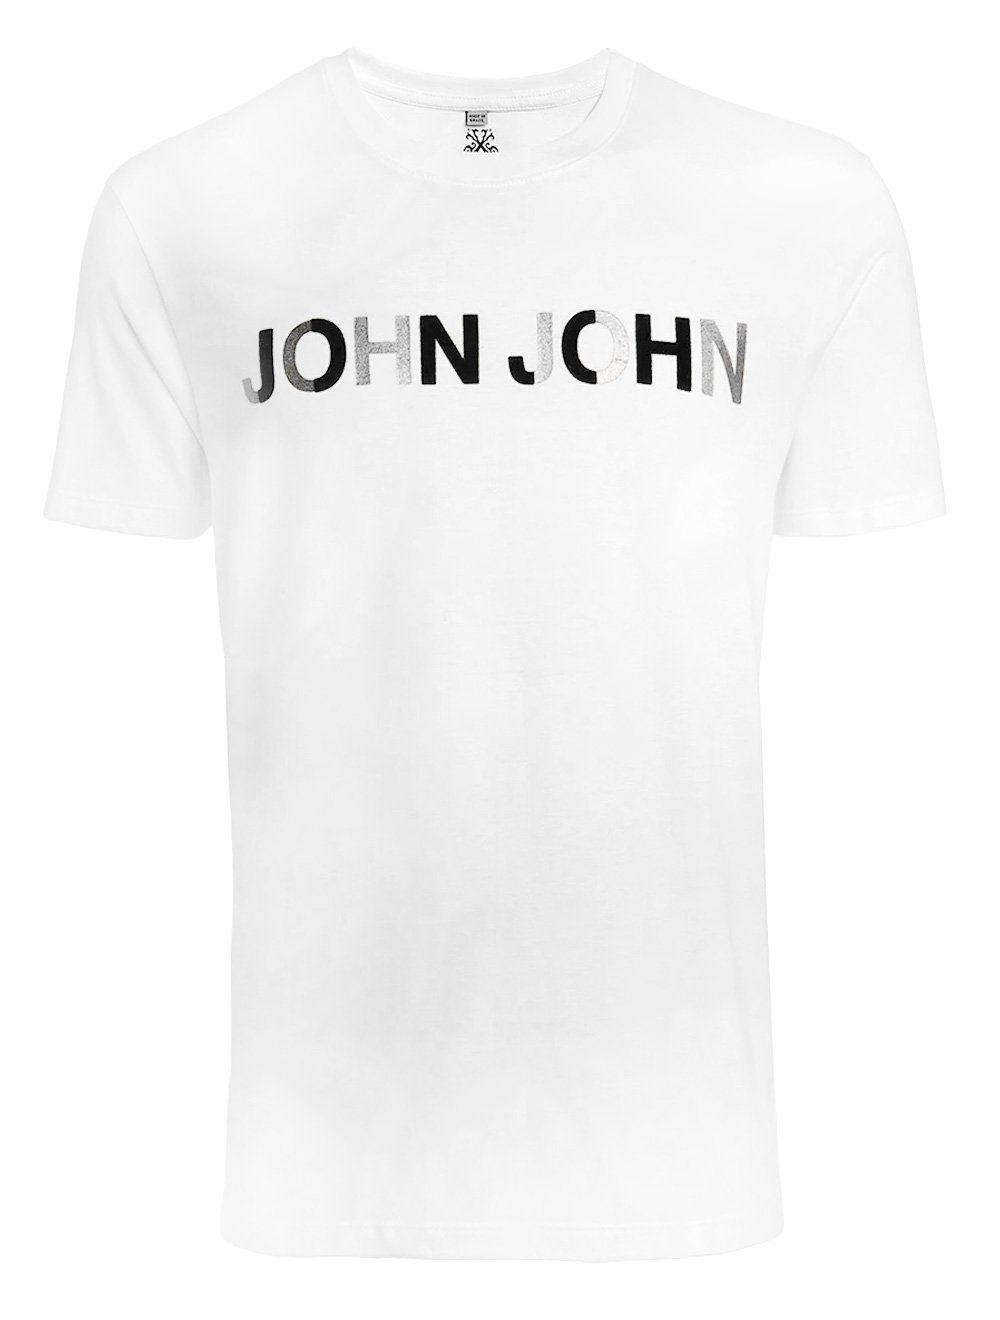 Camiseta John John Masculina Regular Logo Out Branca 